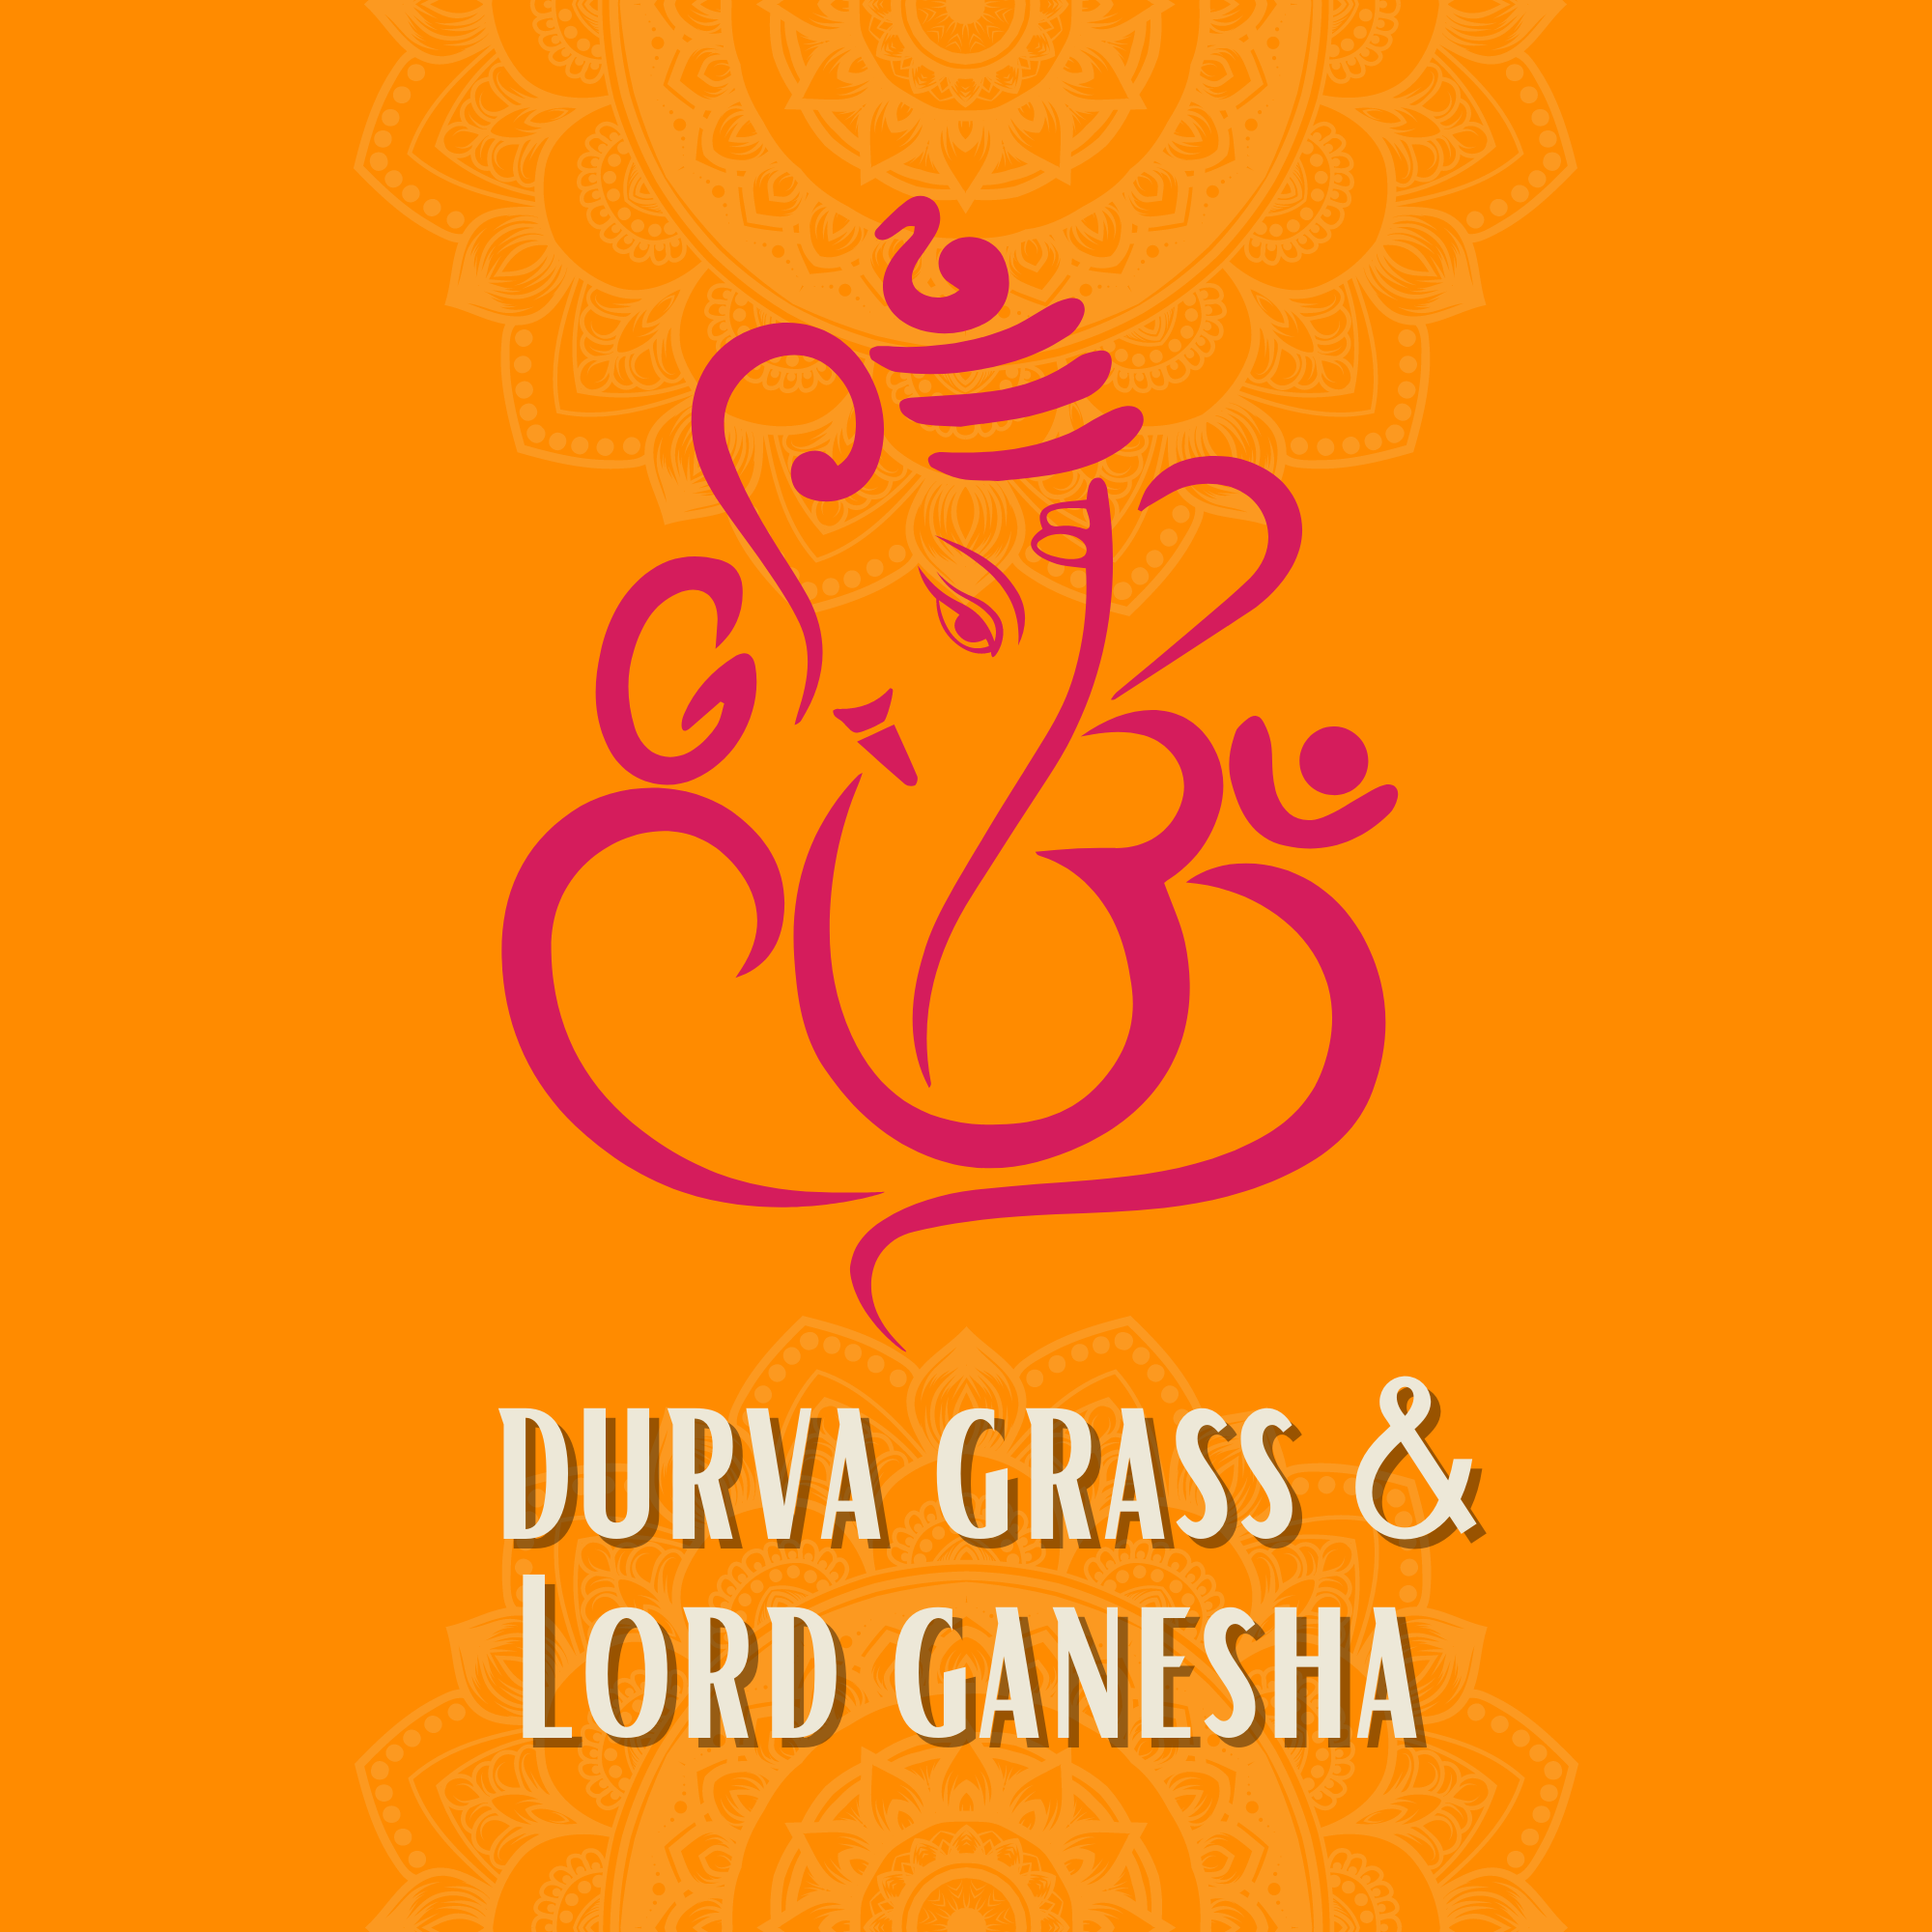 Lord Ganesha Sign stock illustration. Illustration of pray - 10750416